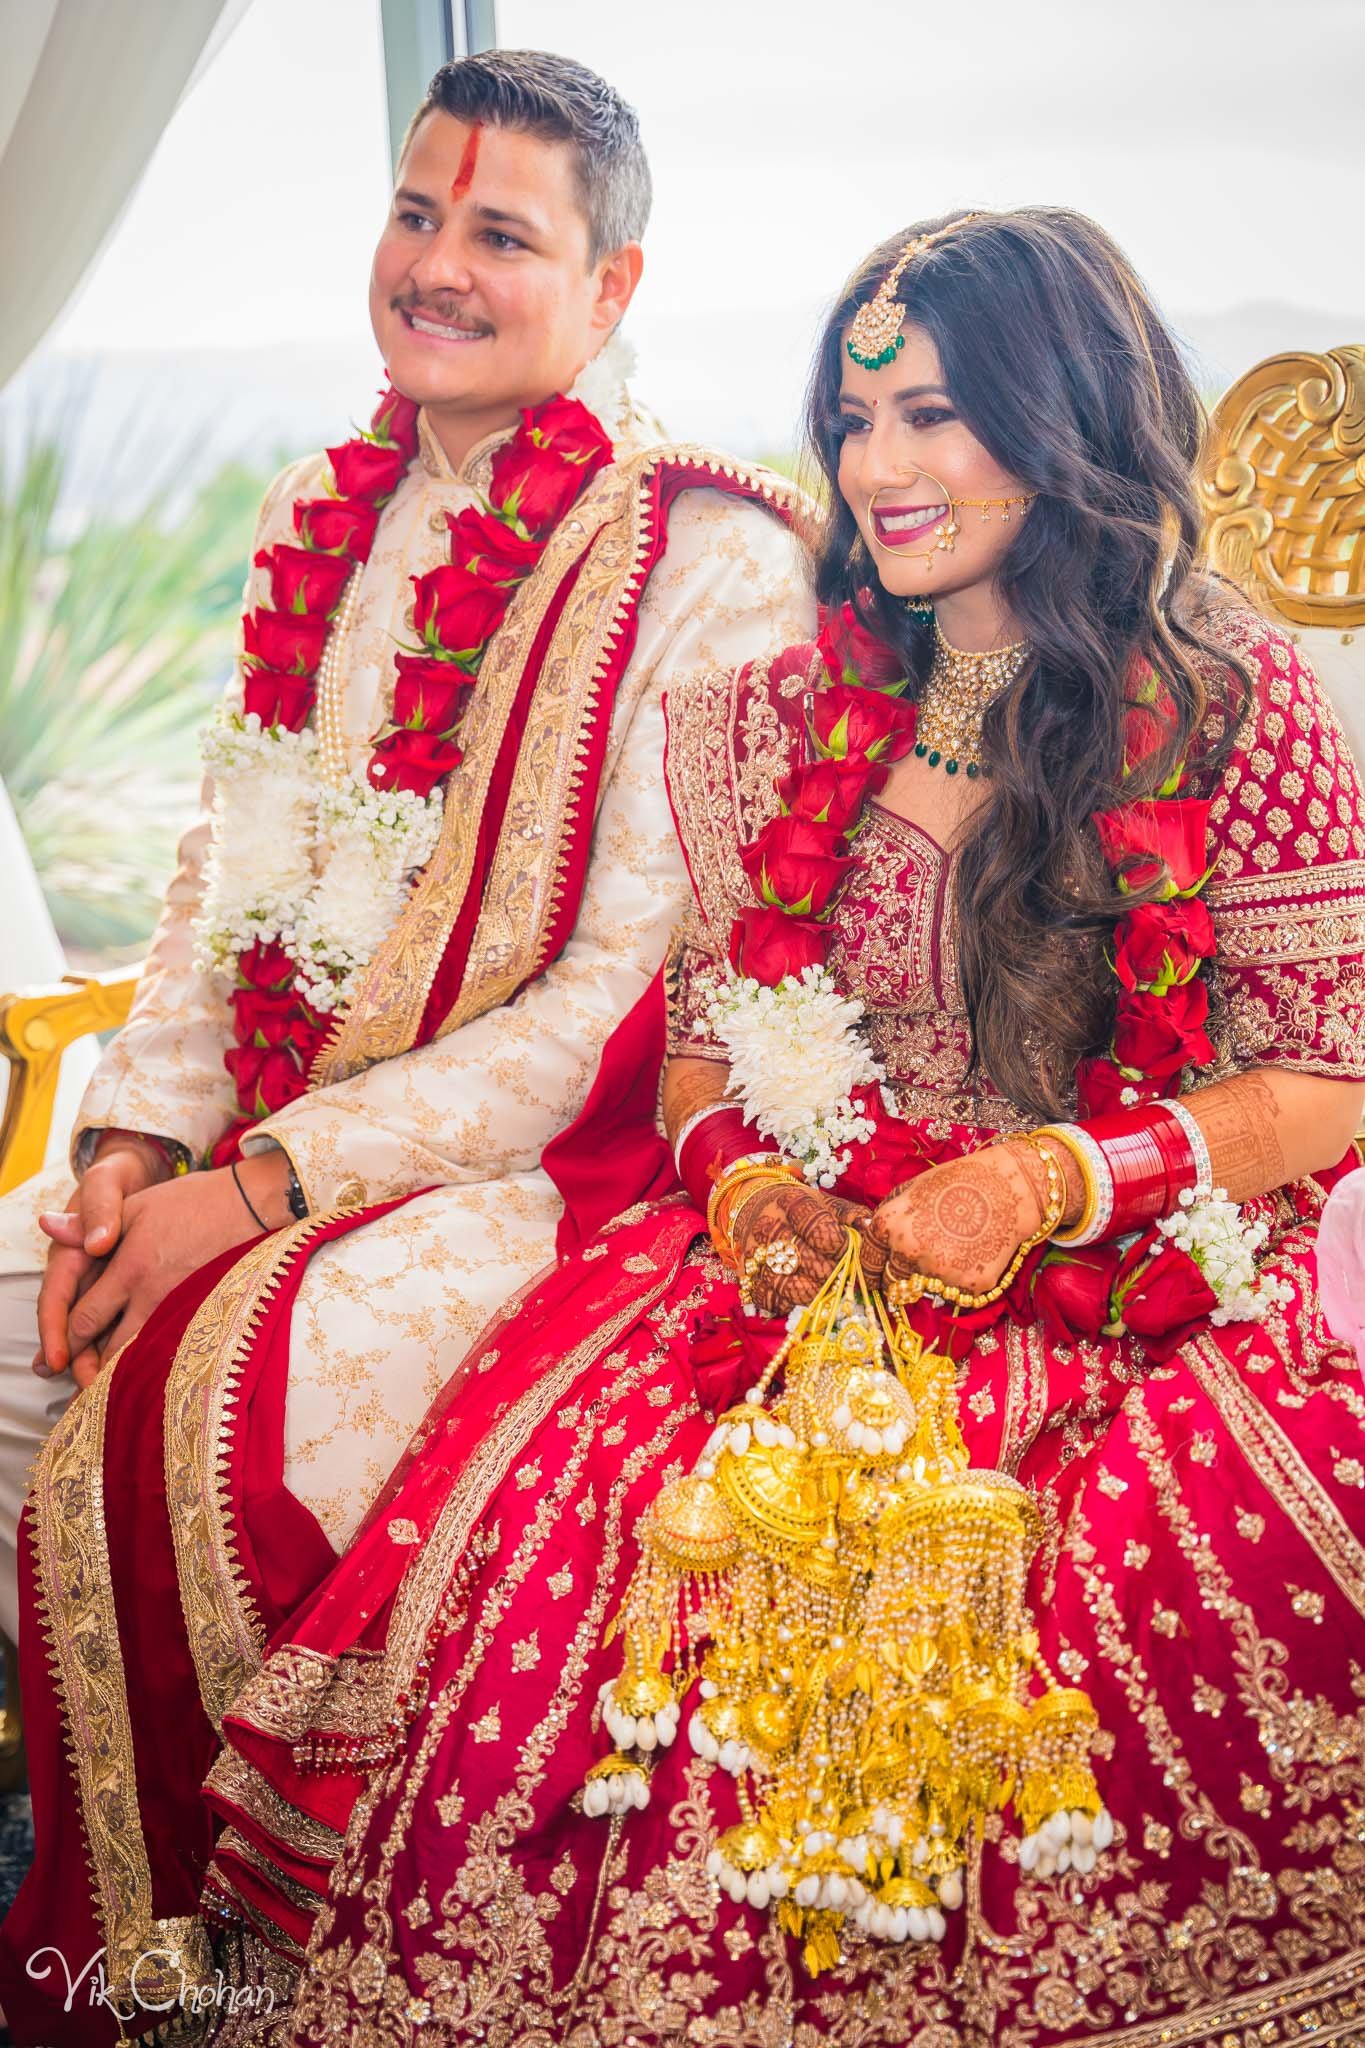 2022-06-09-Annie-&-Steven-Las-Vegas-Indian-Wedding-Ceremony-Photography-Vik-Chohan-Photography-Photo-Booth-Social-Media-VCP-173.jpg